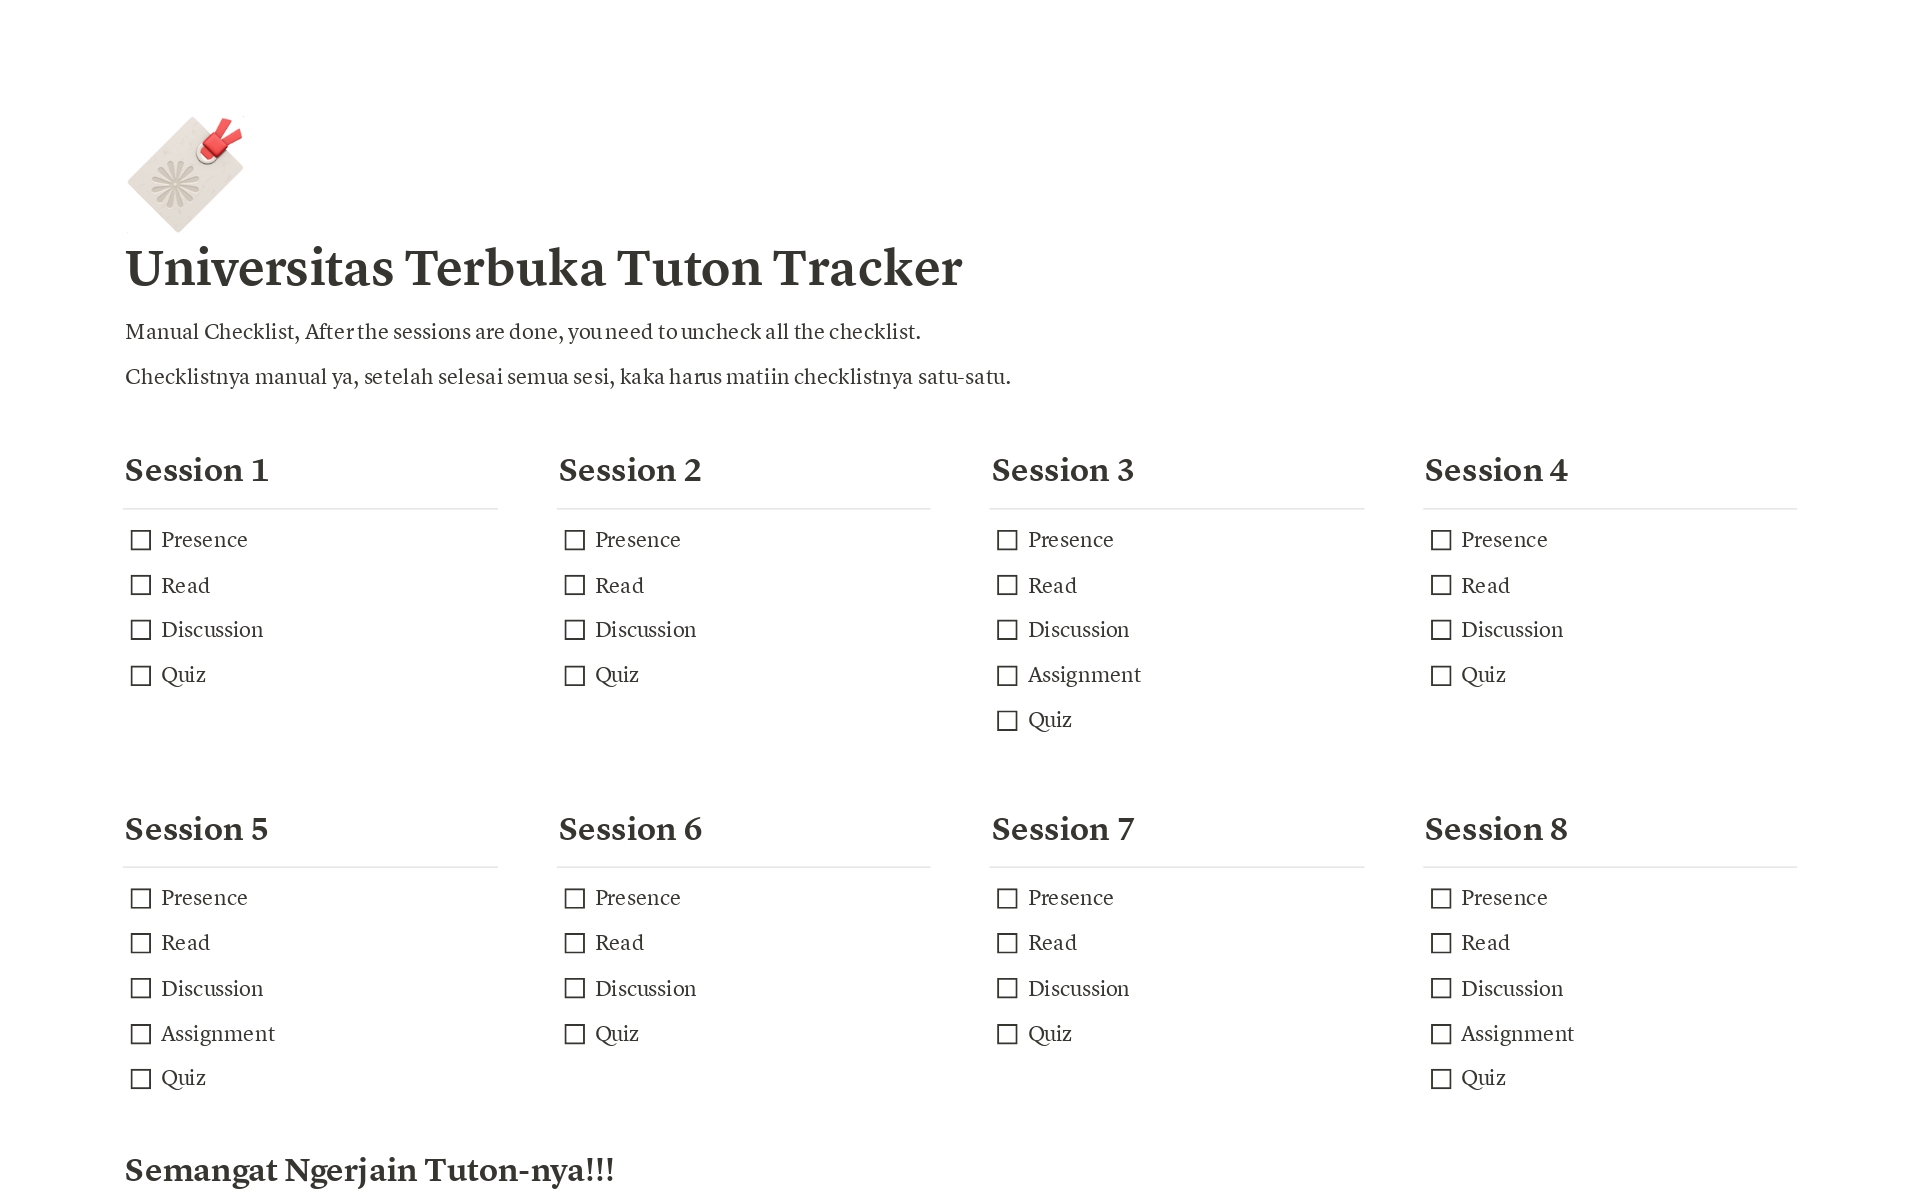 Onlline Tutorial tracker for Universitas Terbuka students